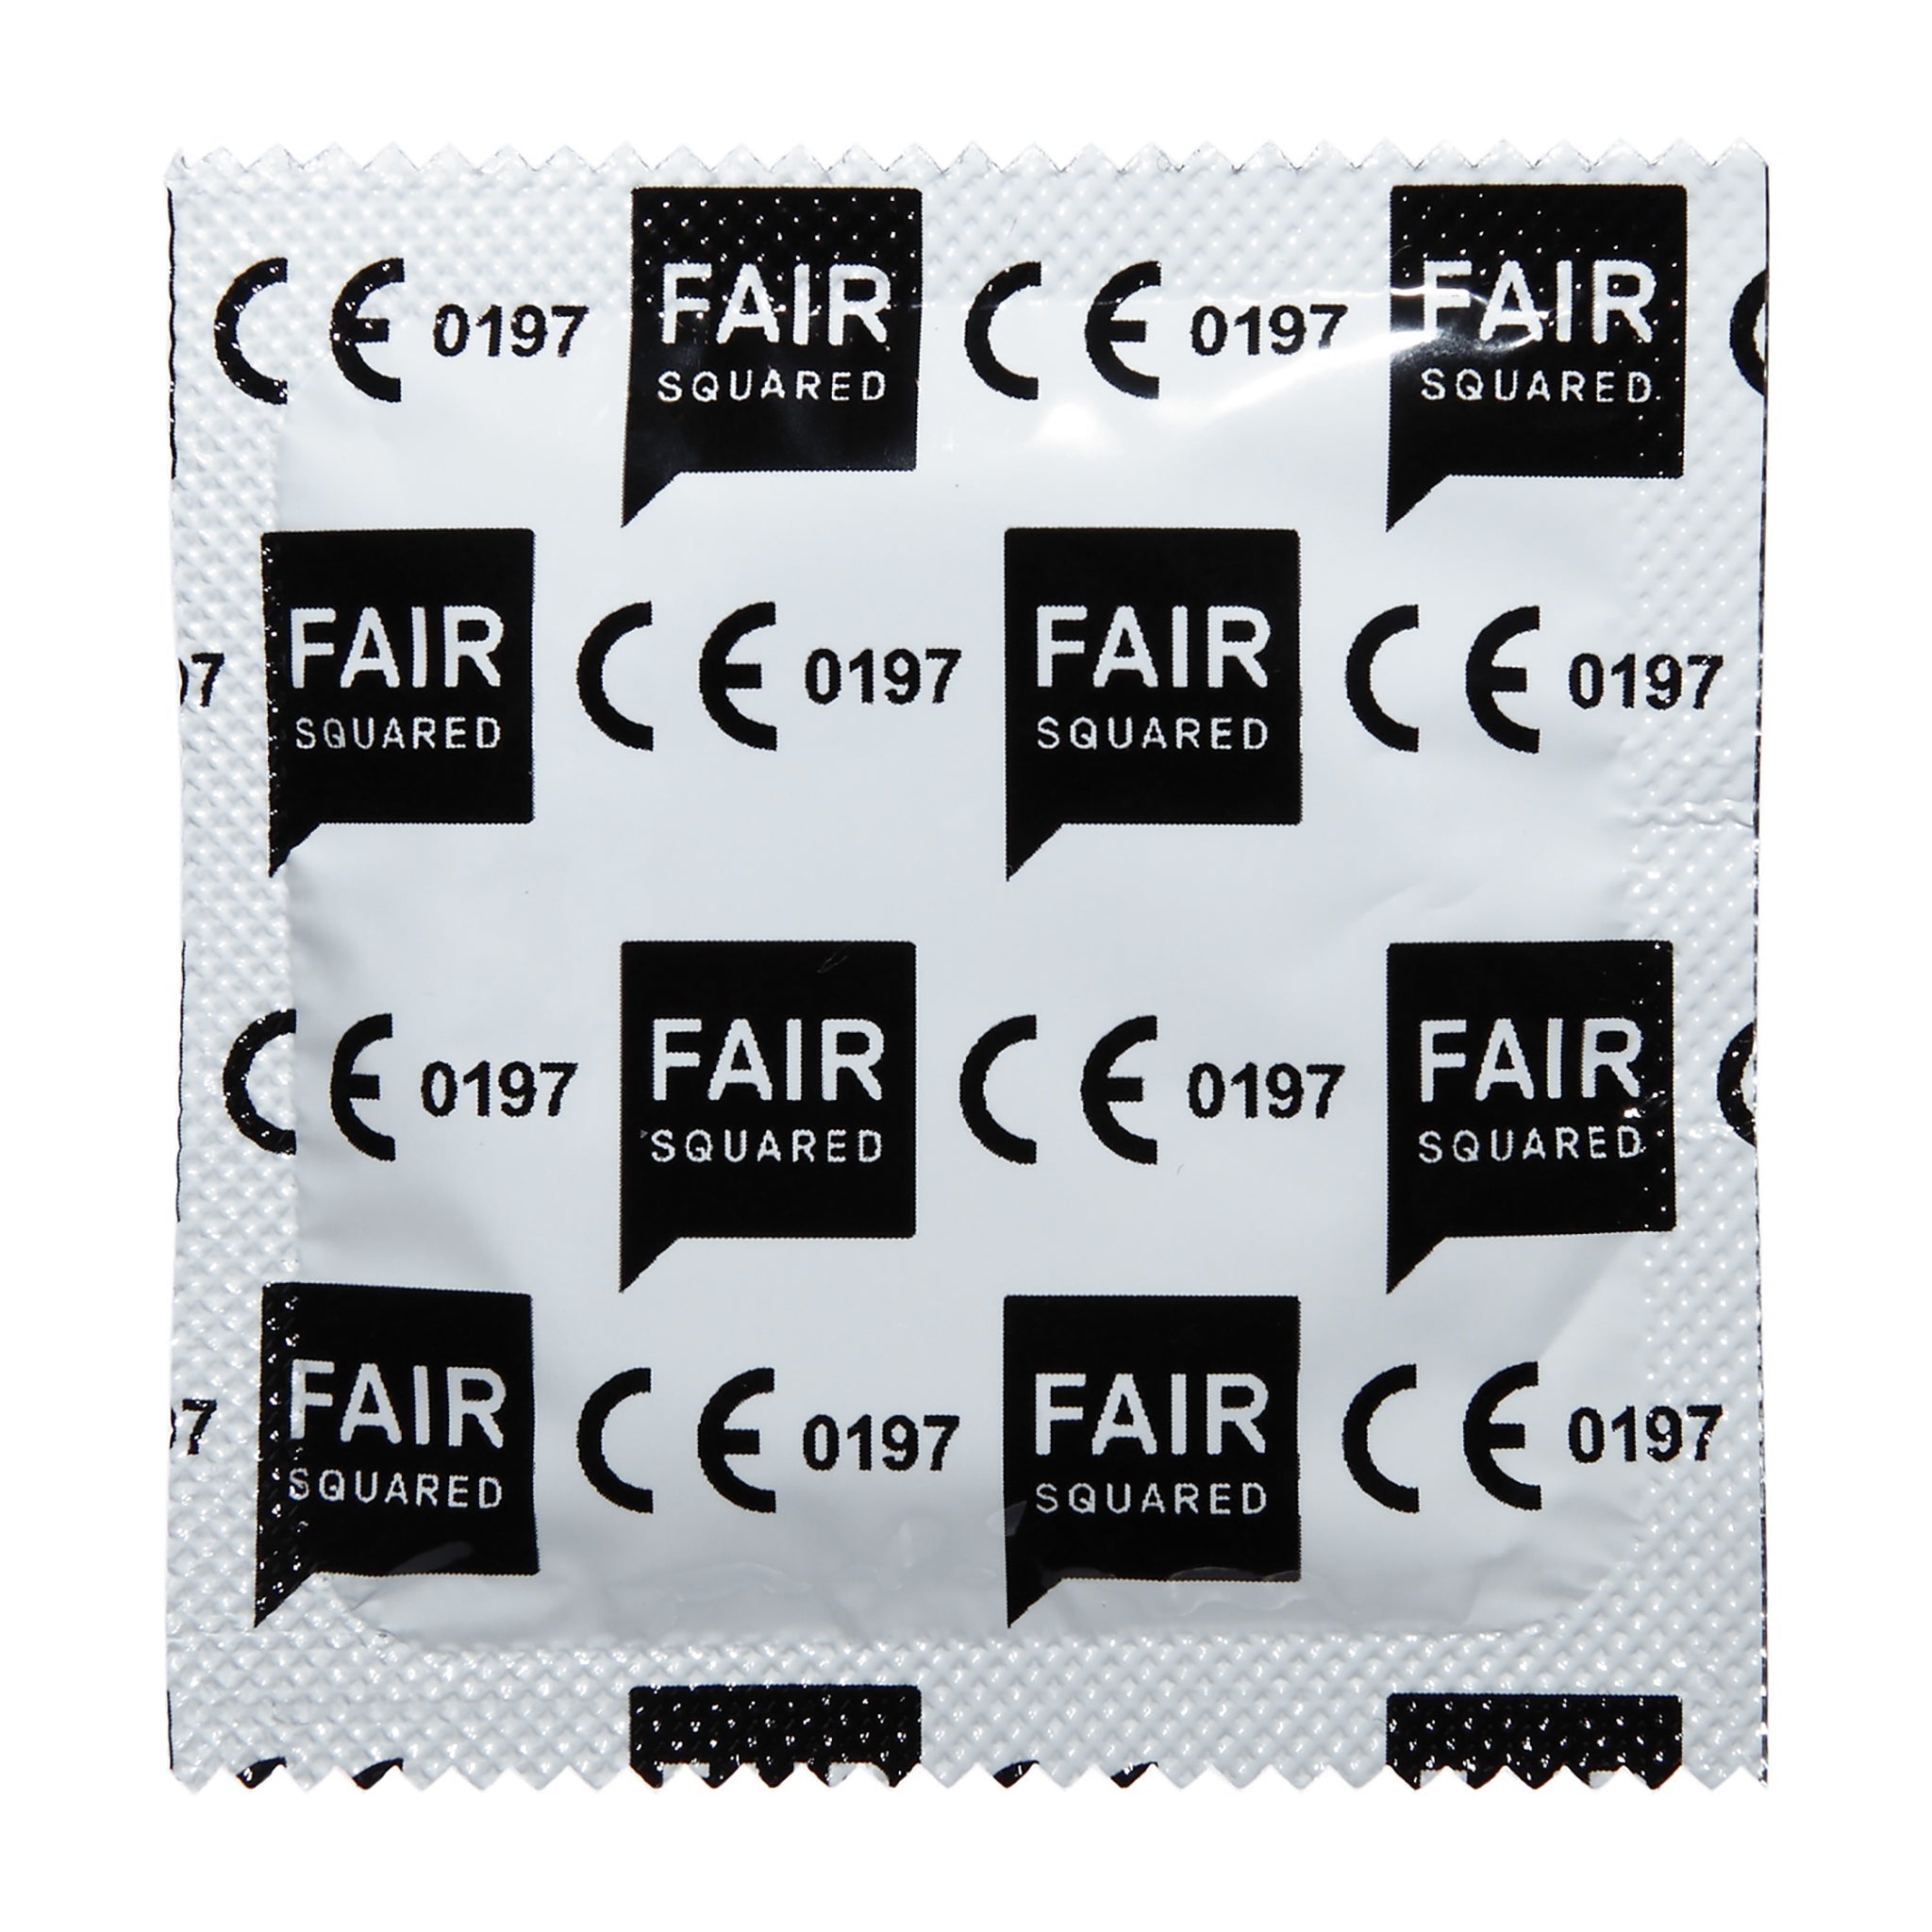 Fairtrade Ethical Condoms - Max Perform - mypure.co.uk